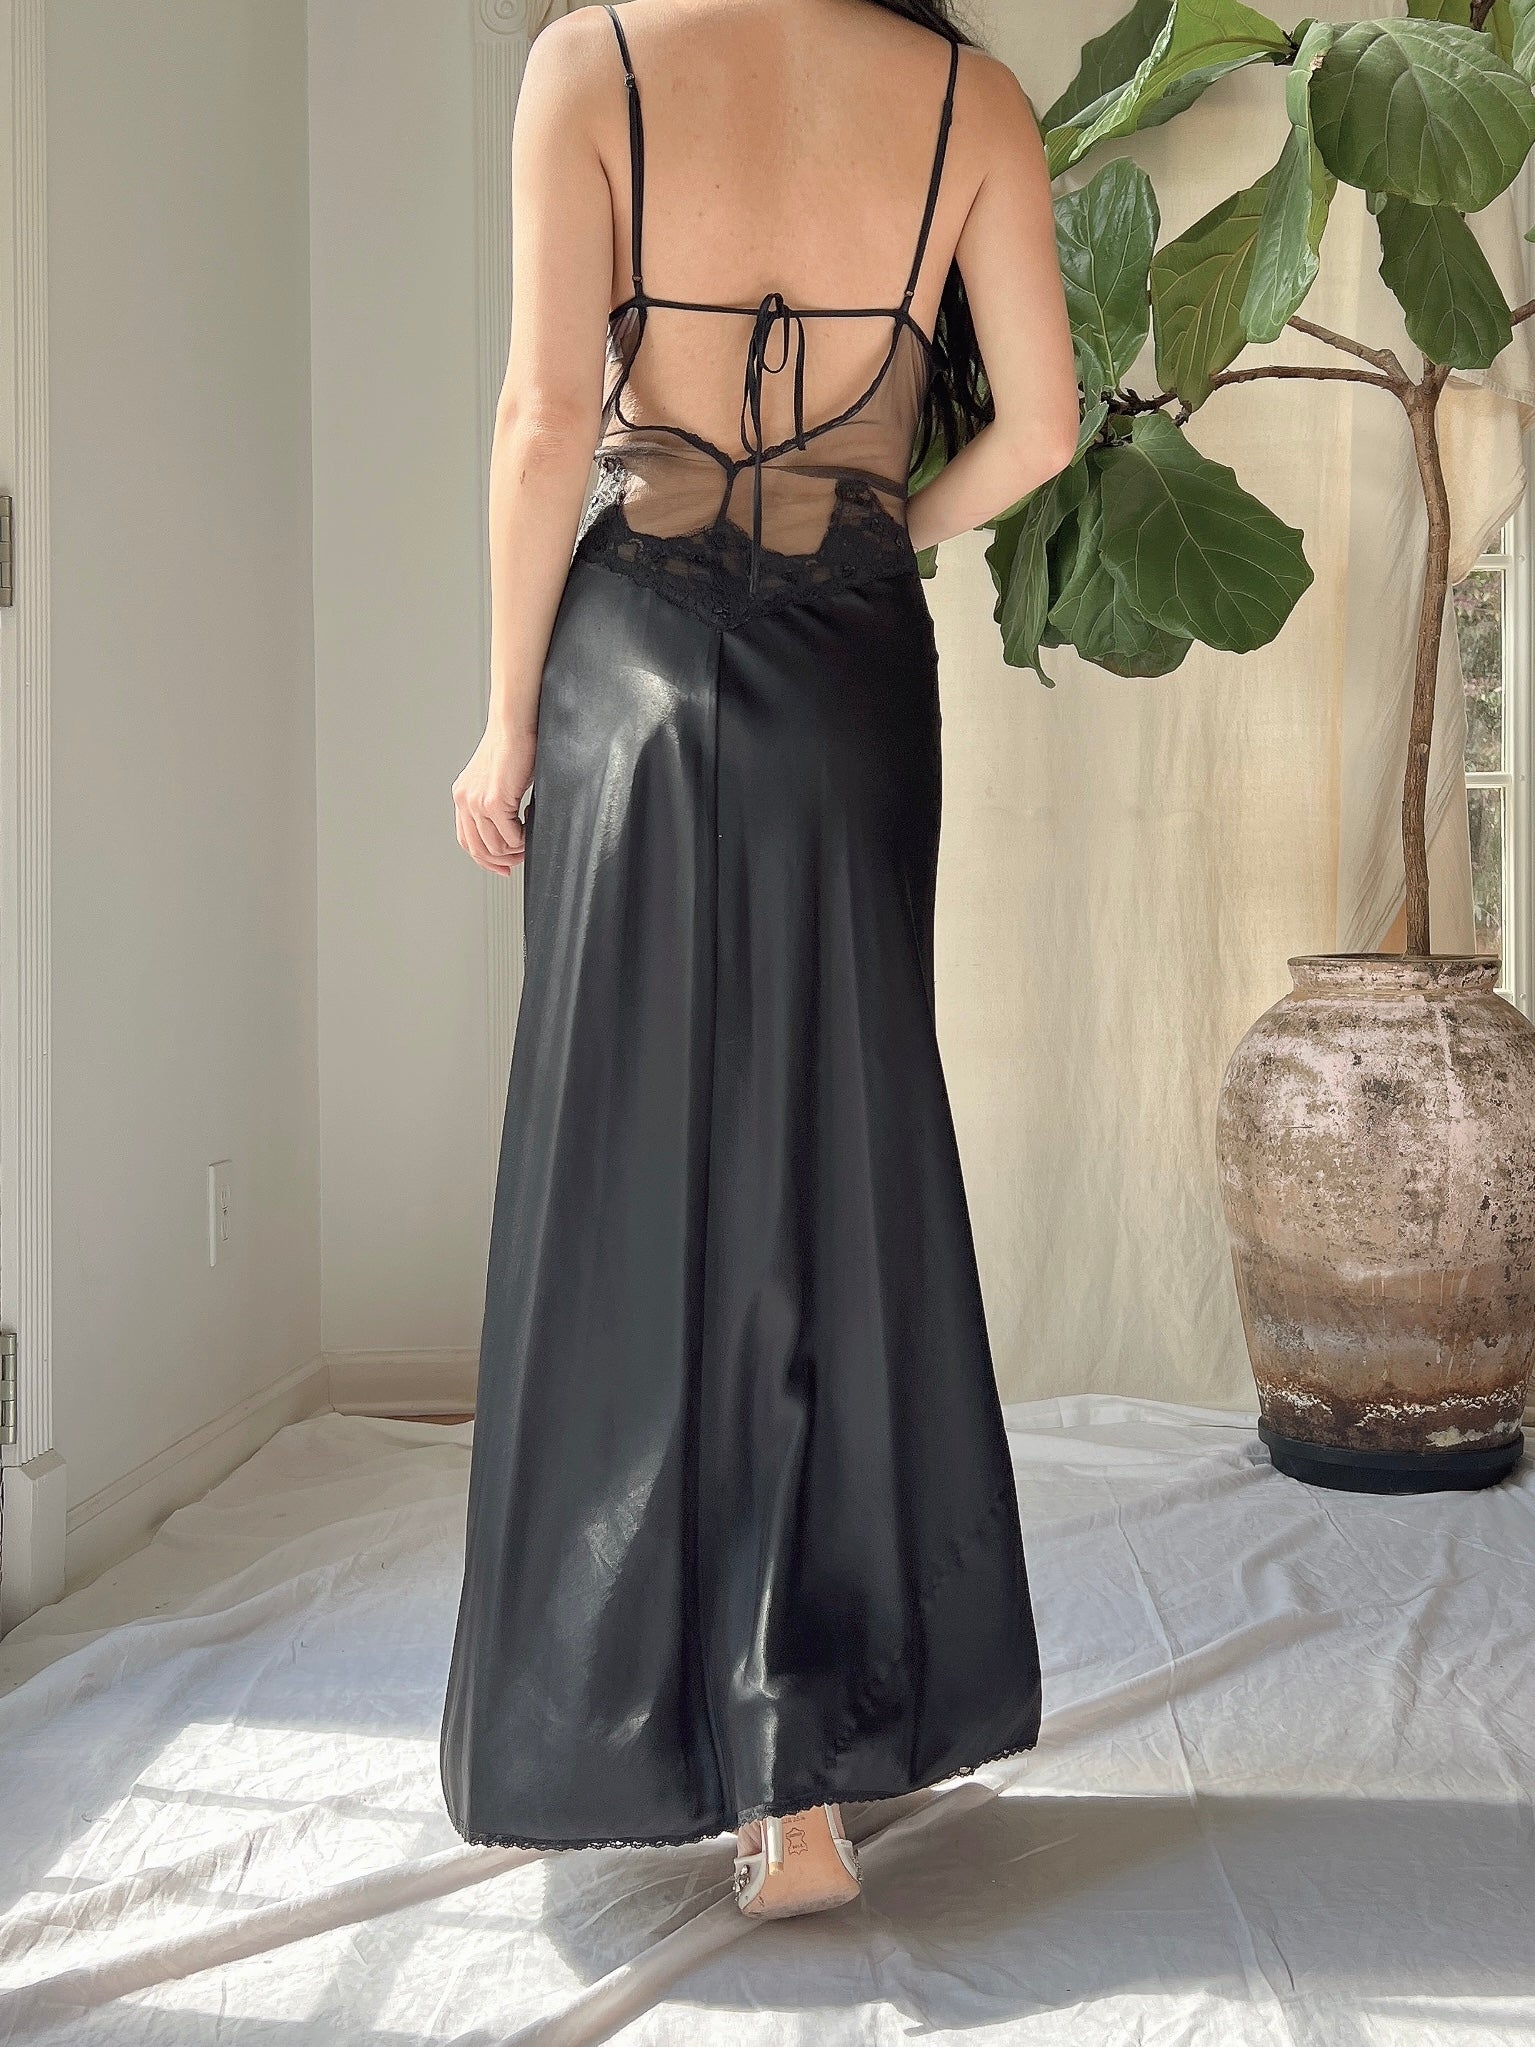 Vintage Black Satin Slip Dress - M